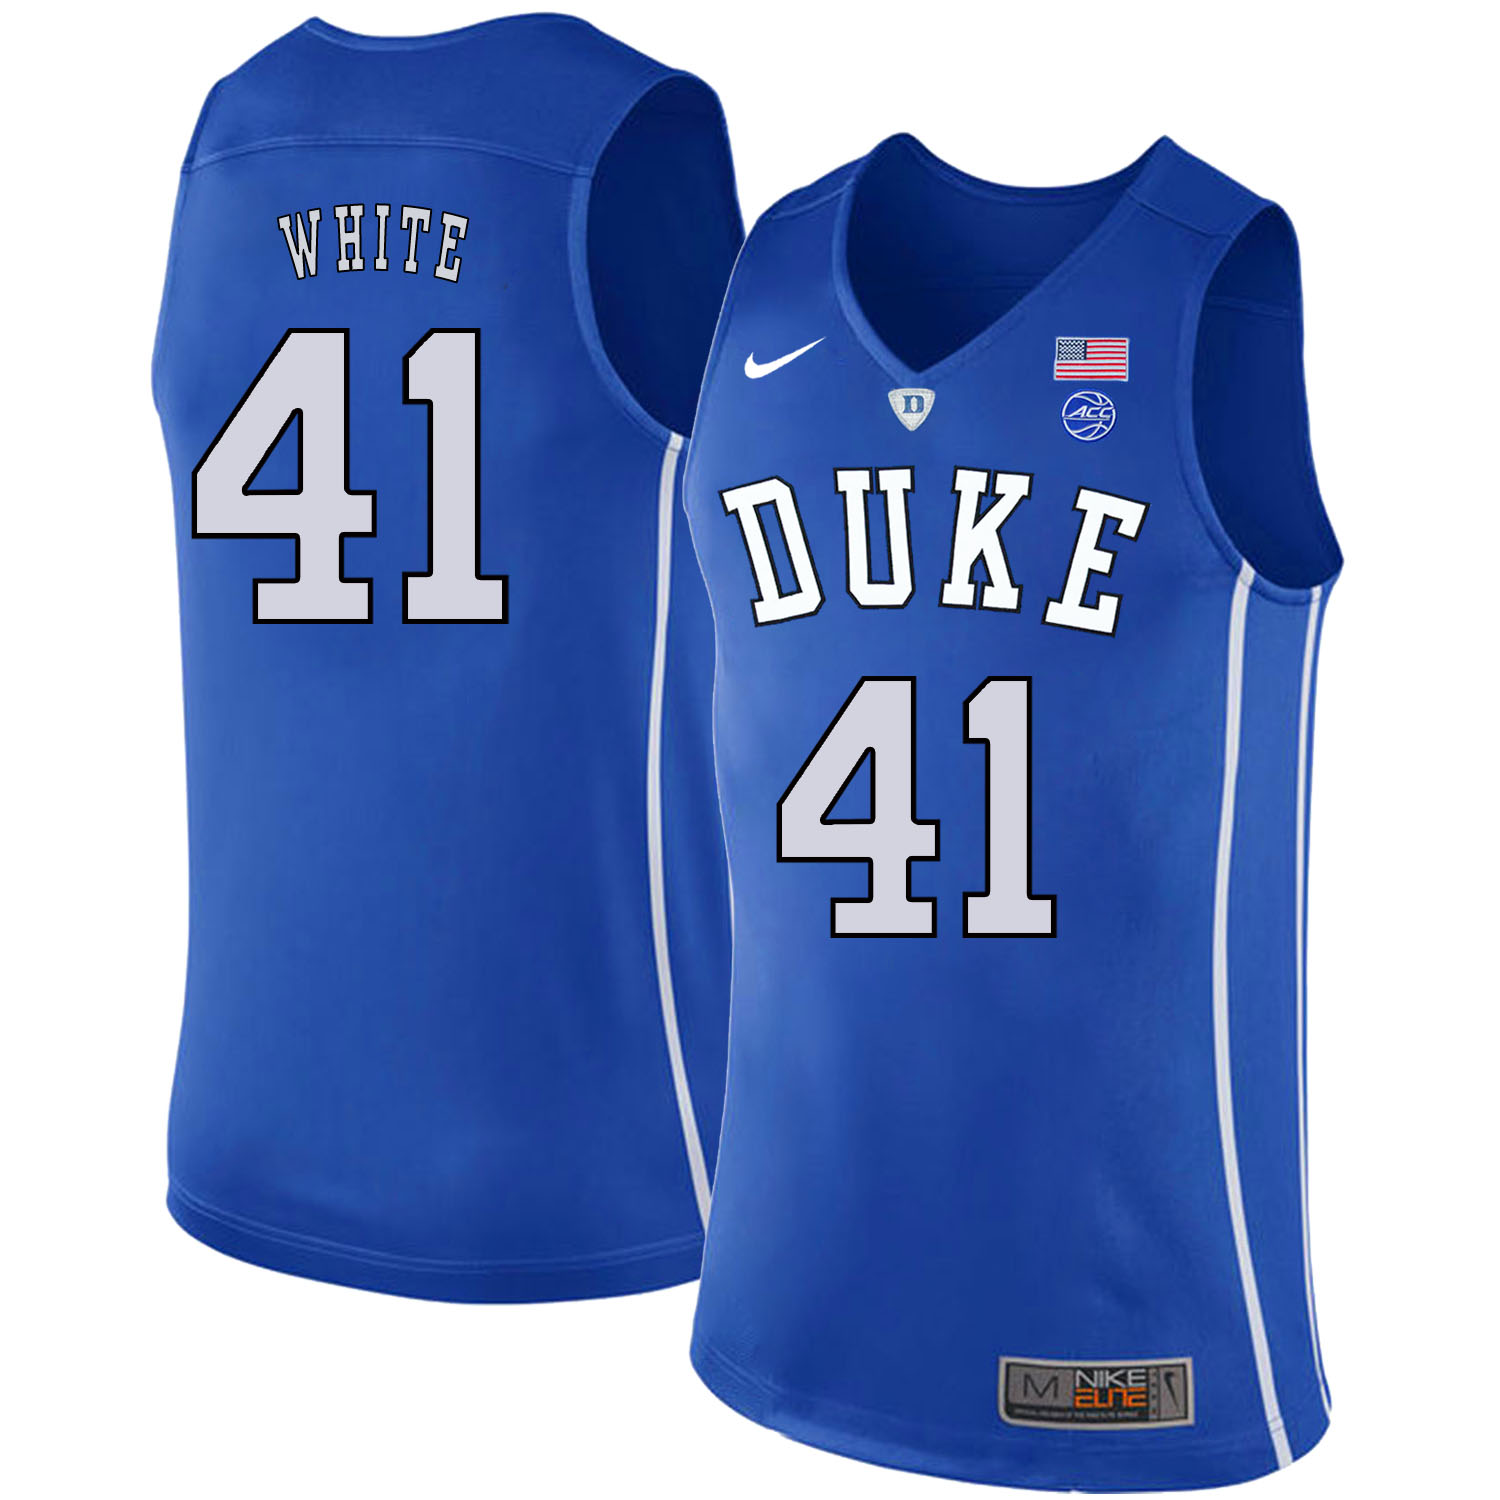 Duke Blue Devils 41 Jack White Blue Nike College Basketball Jersey